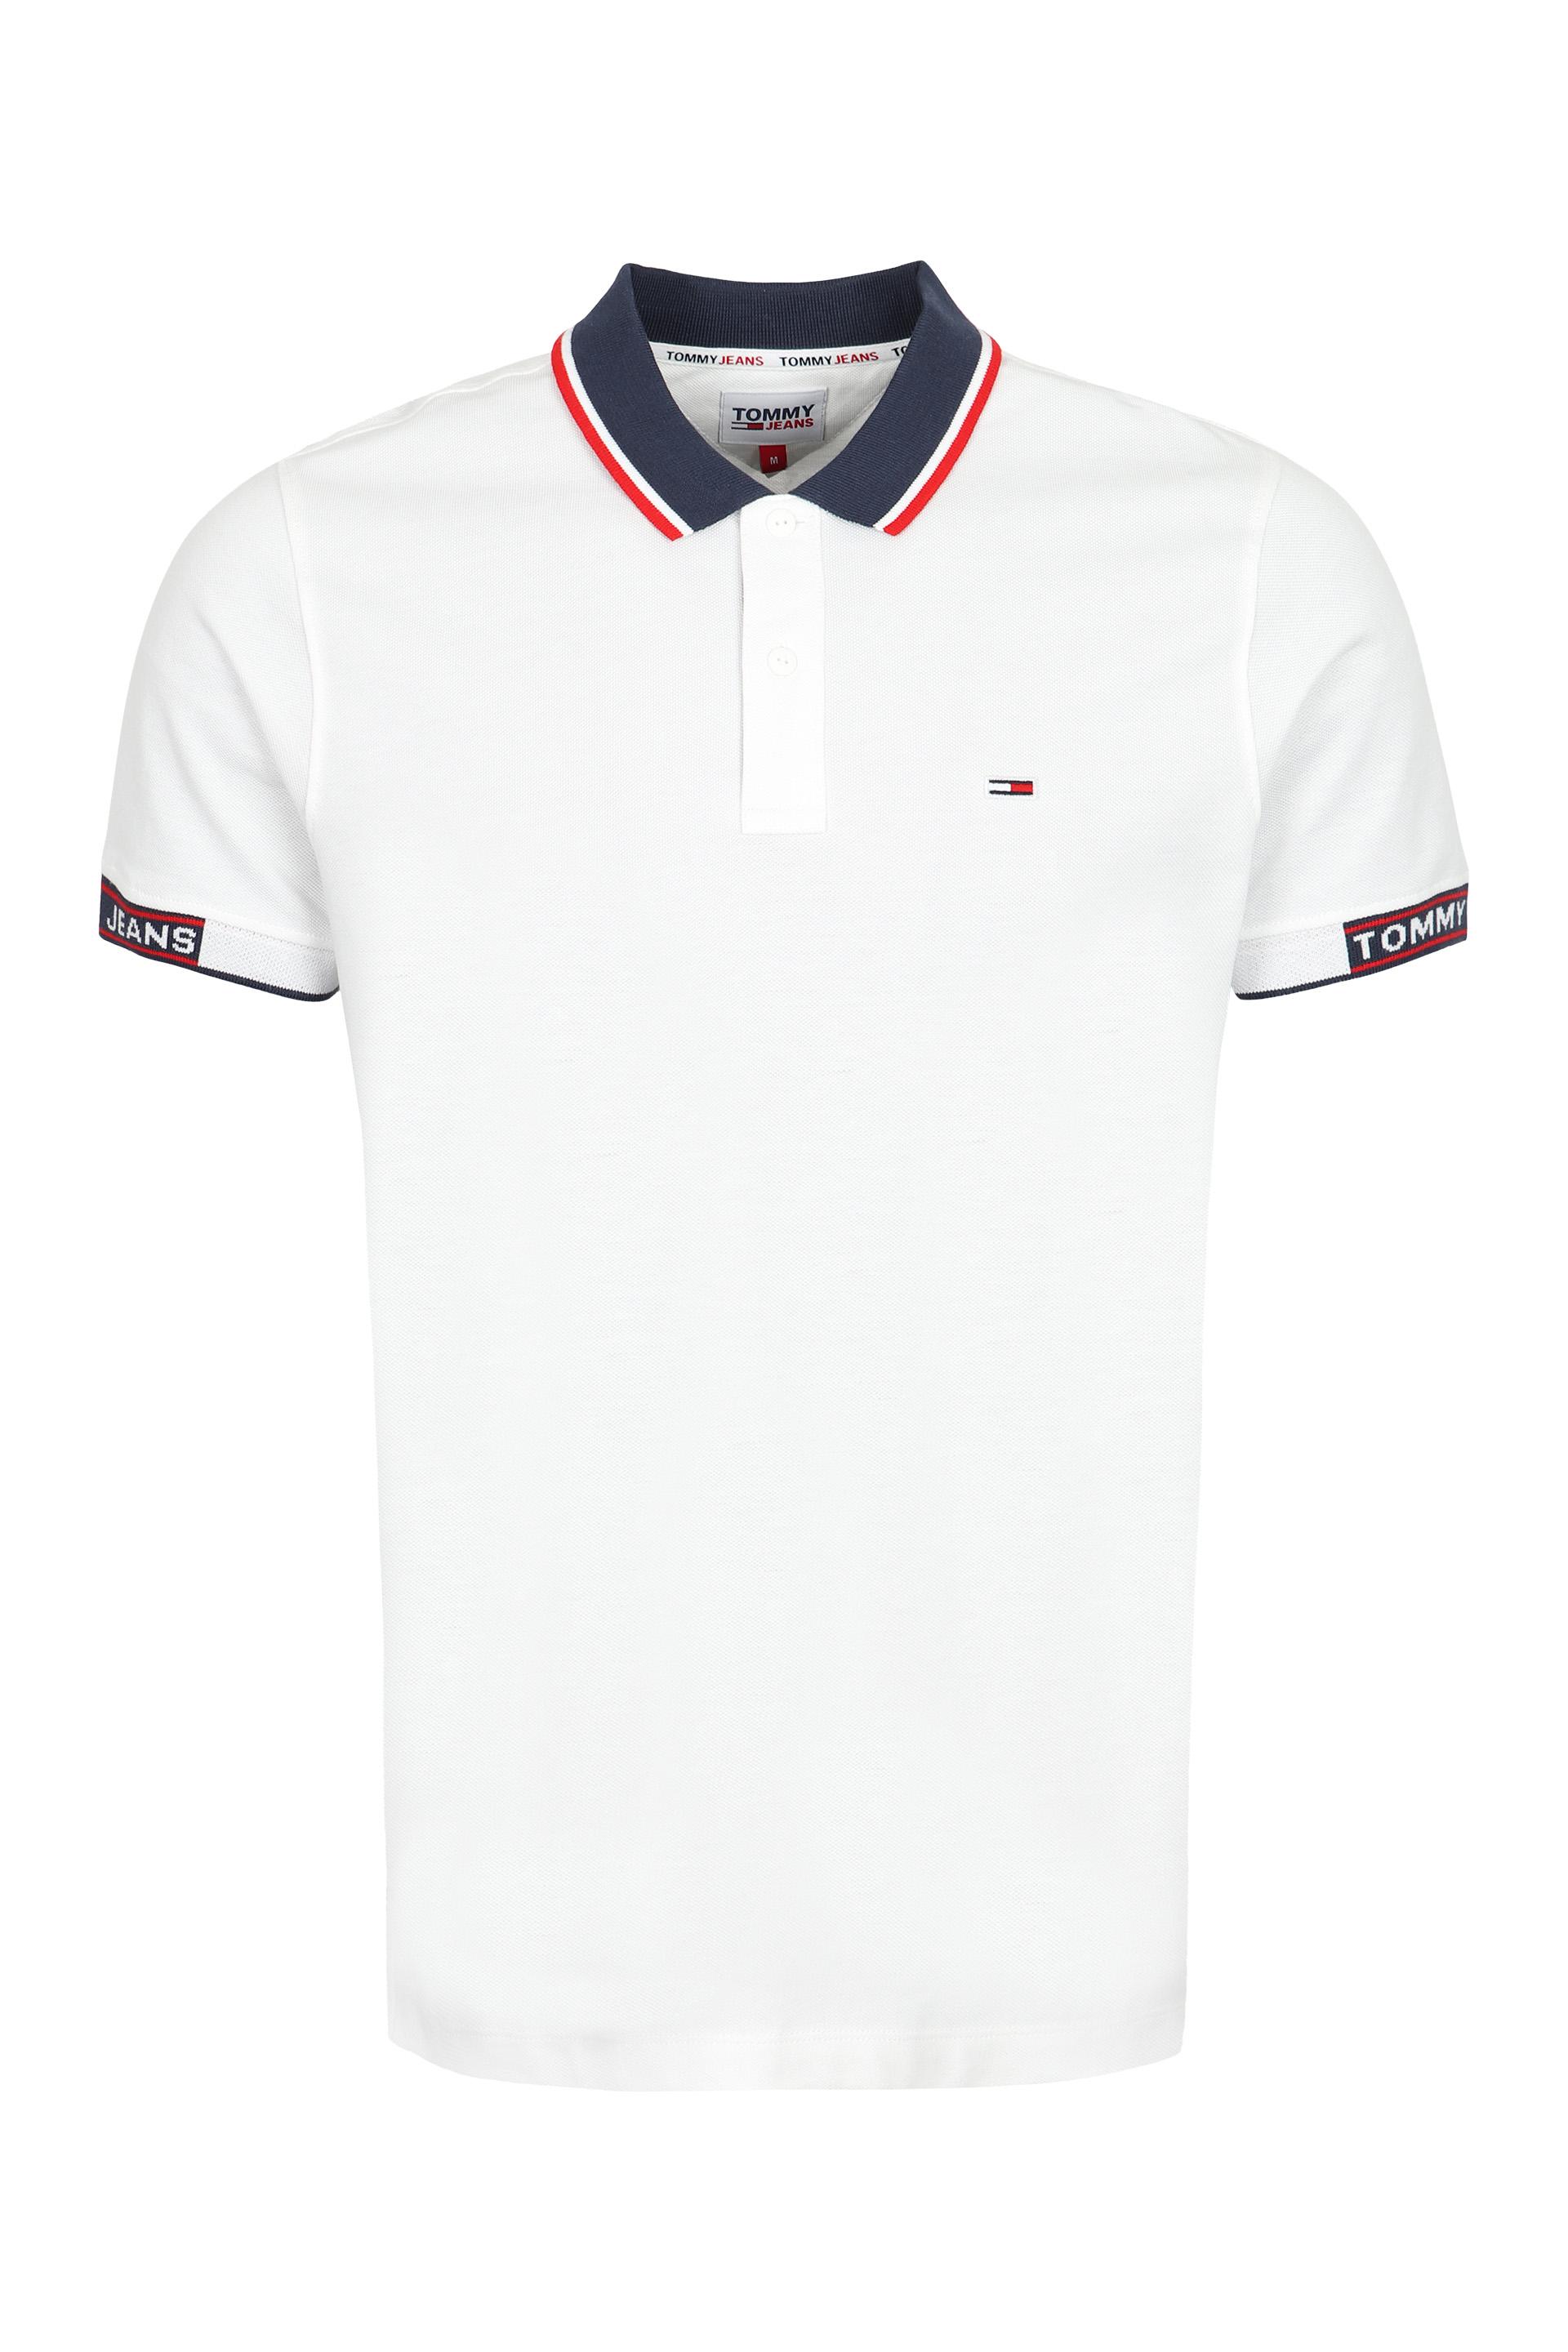 geest Vermeend Tegenslag Tommy Hilfiger Cotton-piqué Polo Shirt in White for Men | Lyst